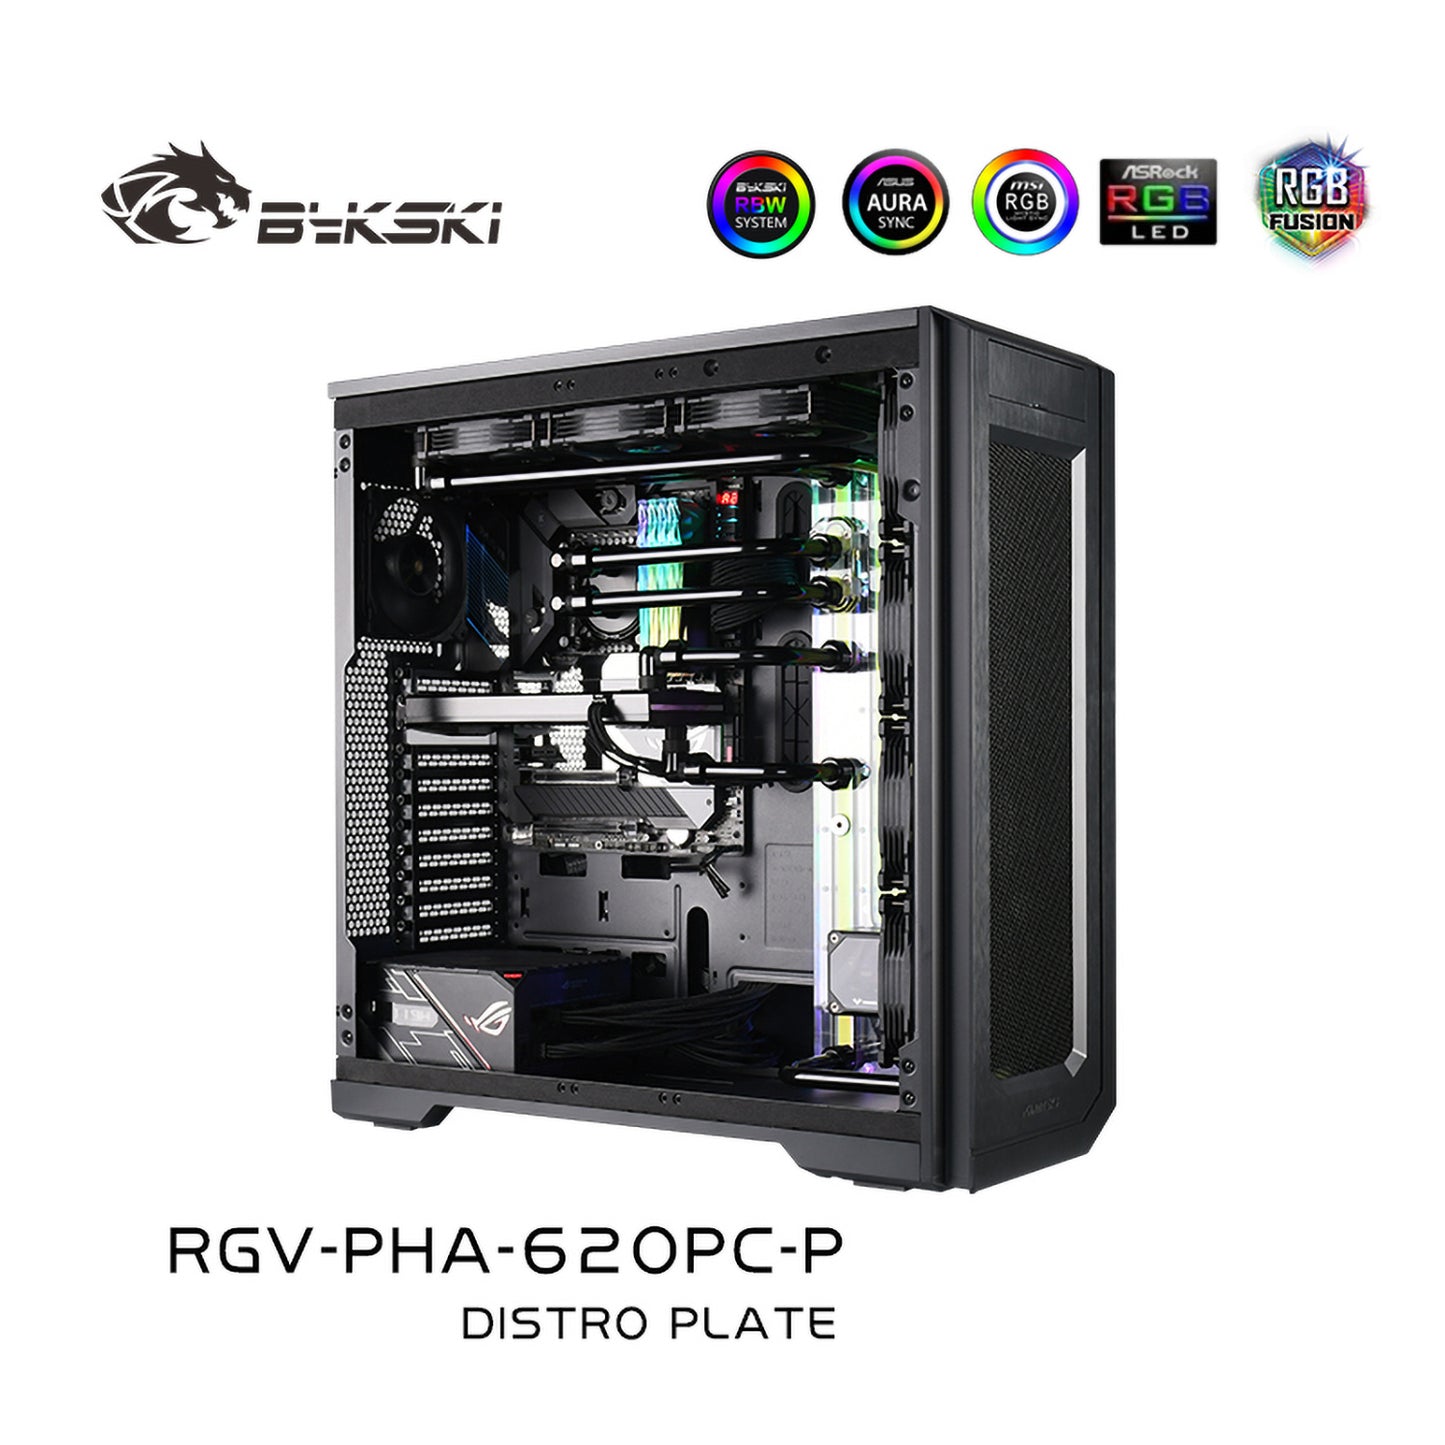 Bykski Distro Plate For Phanteks 620PC Case, Acrylic Waterway Board Combo DDC Pump, 5V A-RGB, RGV-PHA-620PC-P